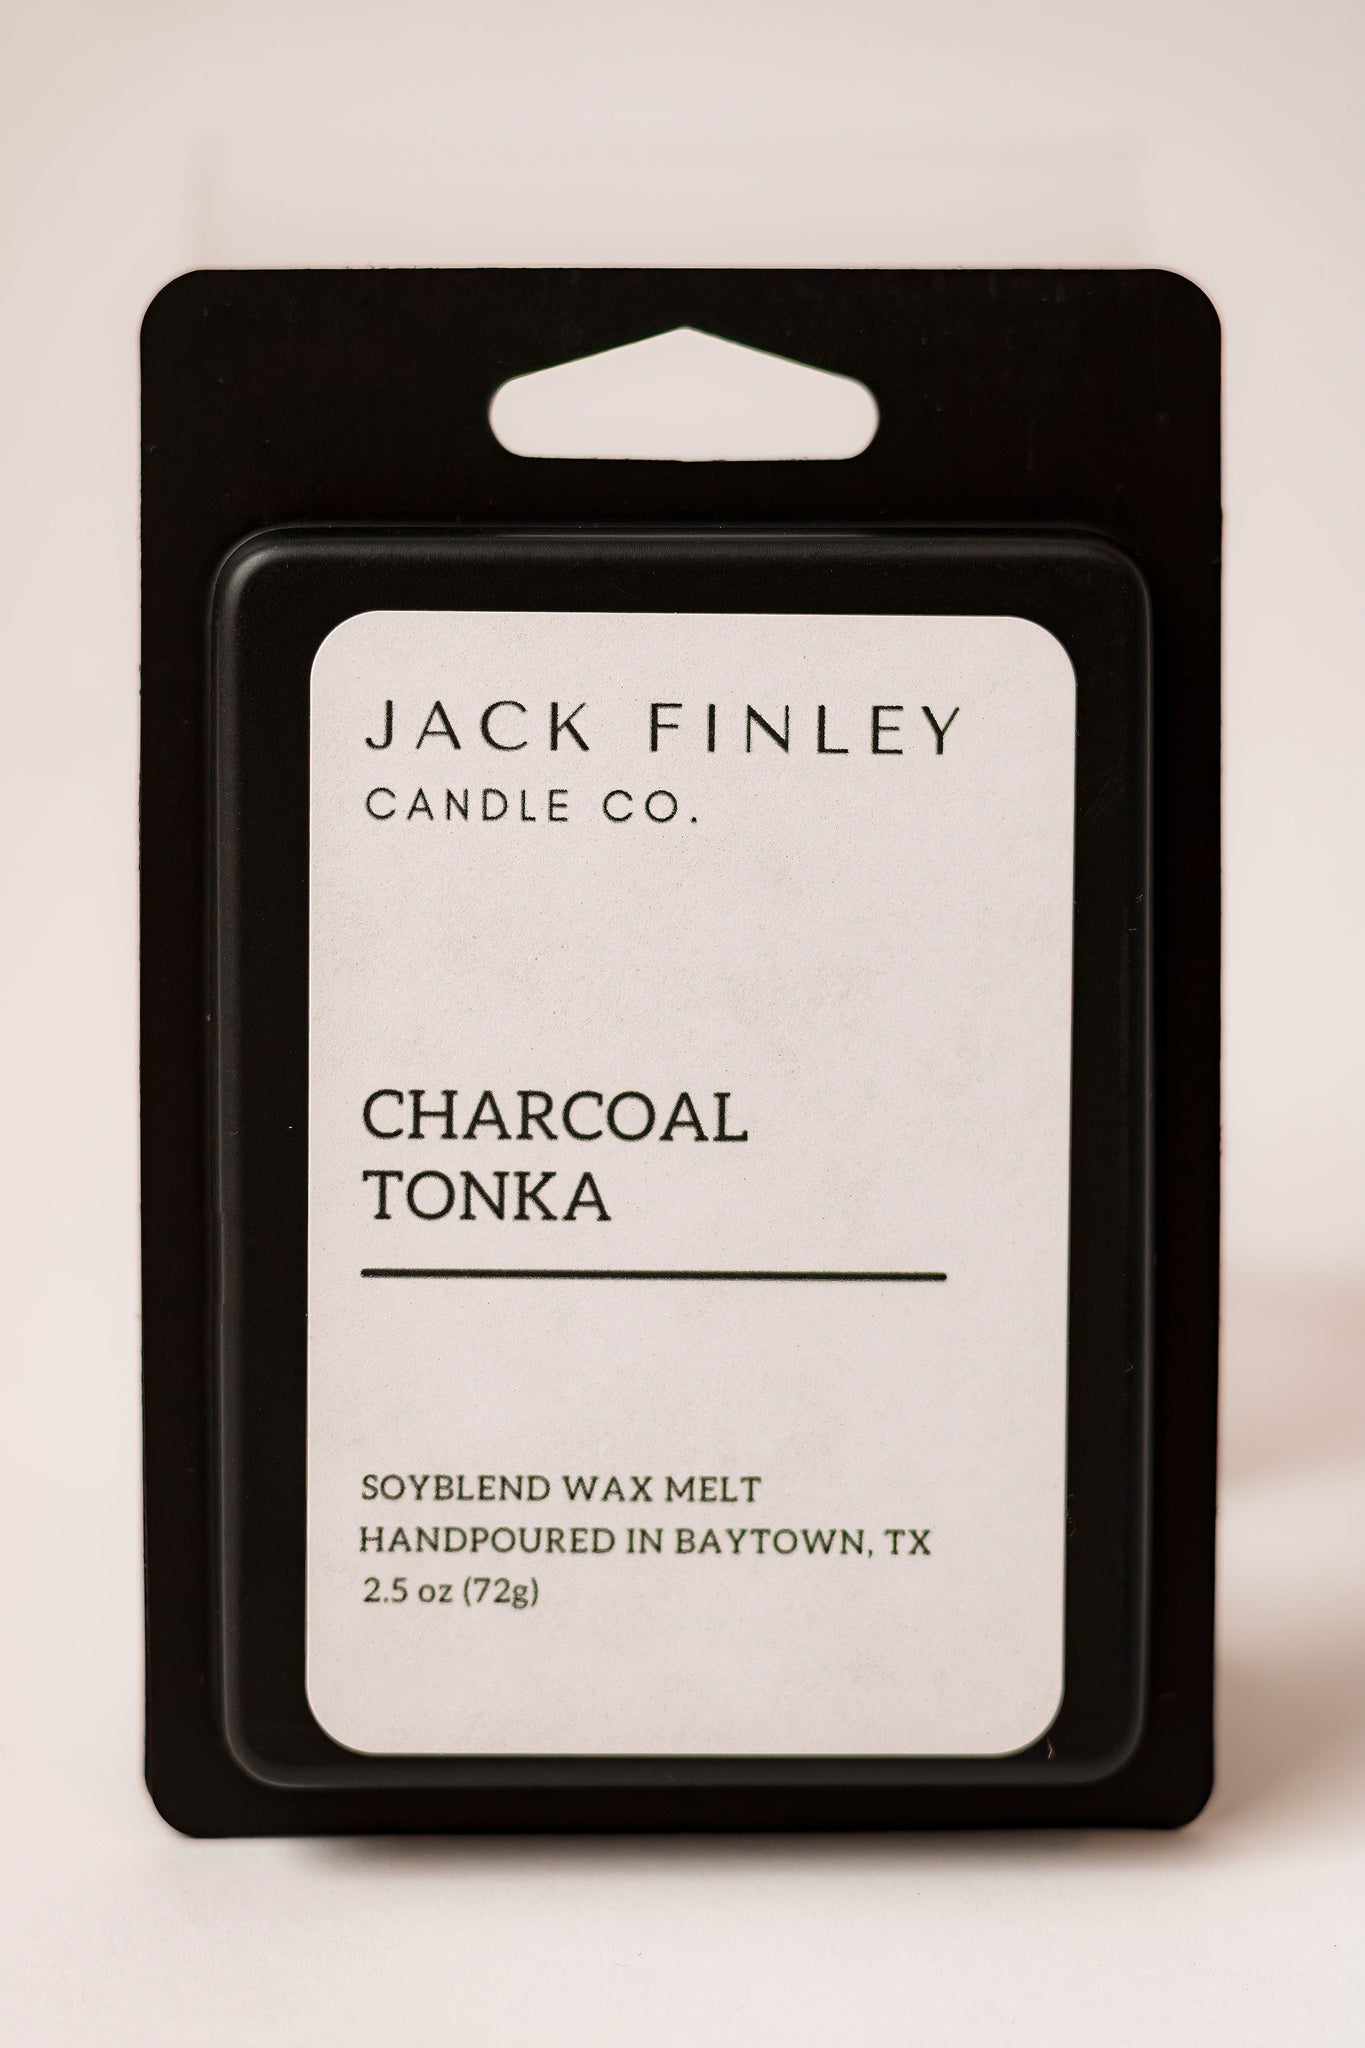 Charcoal Tonka